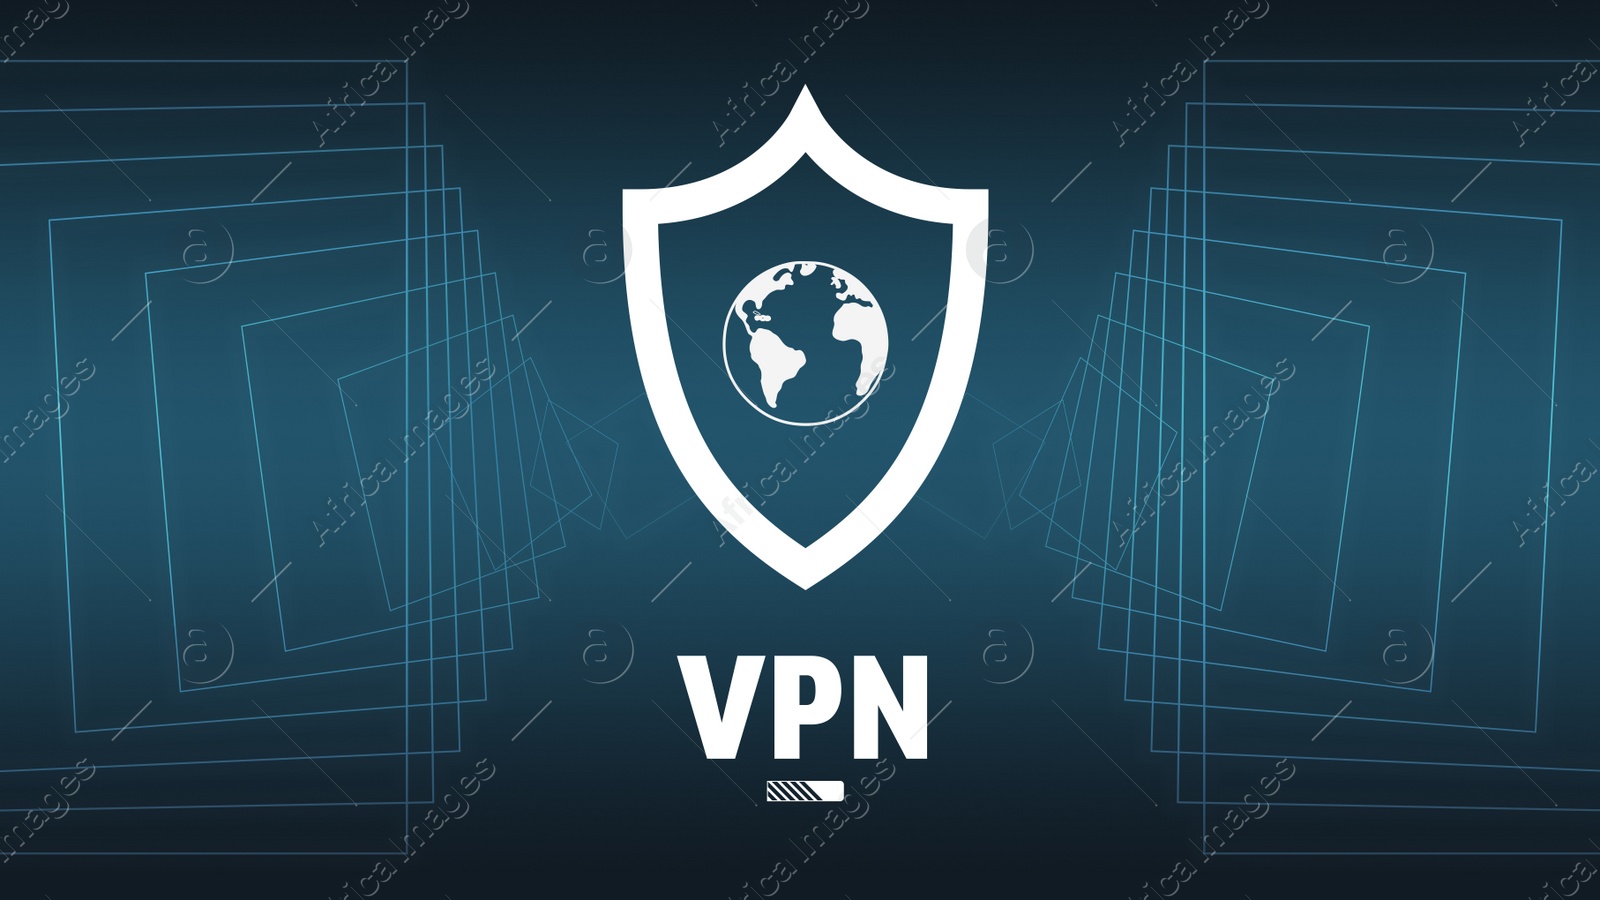 Illustration of Concept of secure network connection. Acronym VPN on color background, illustration